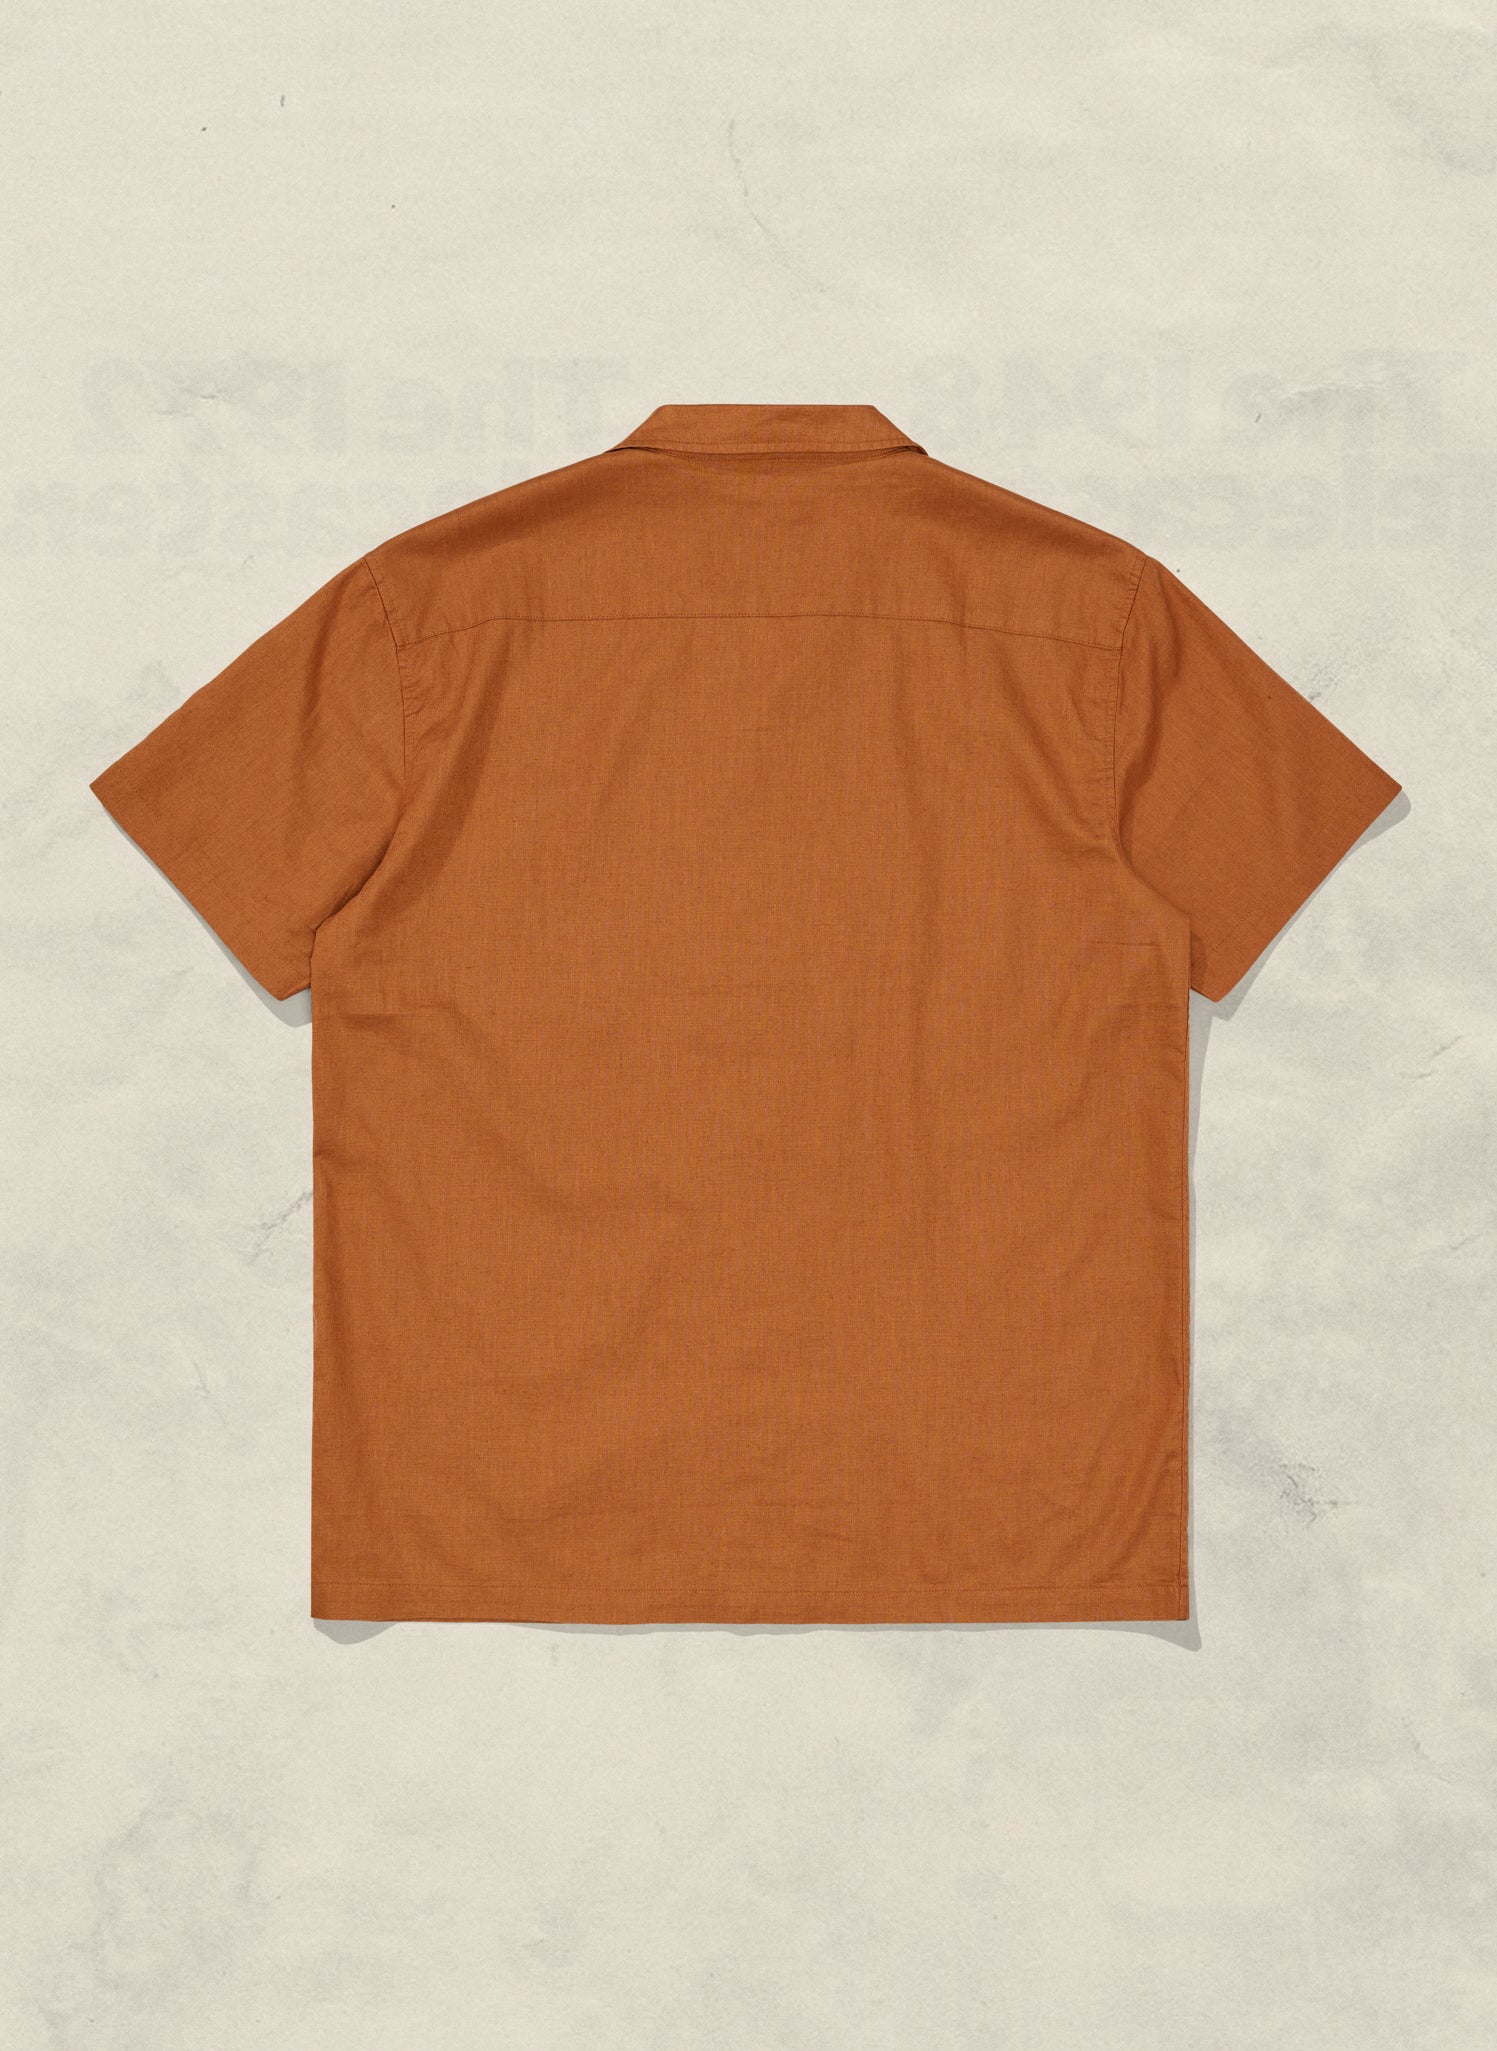 Soft Durable Hemp Organic Cotton Blend Button Up Shirt Unisex by Weld Mfg Earthy Tone Rust Vacation Collared Camp Shirt